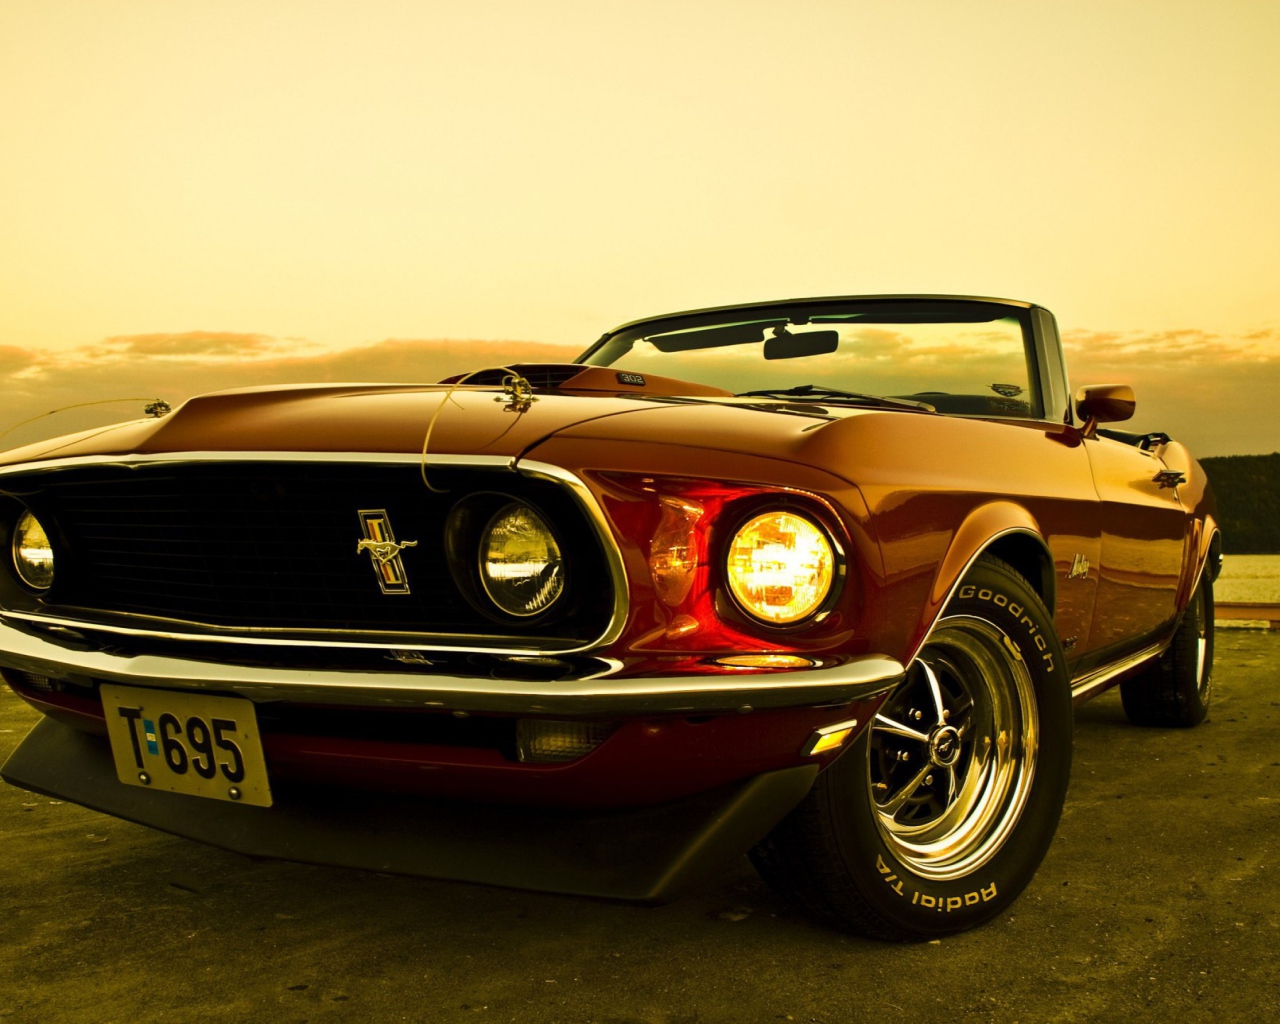 Das 1969 Ford Mustang Wallpaper 1280x1024